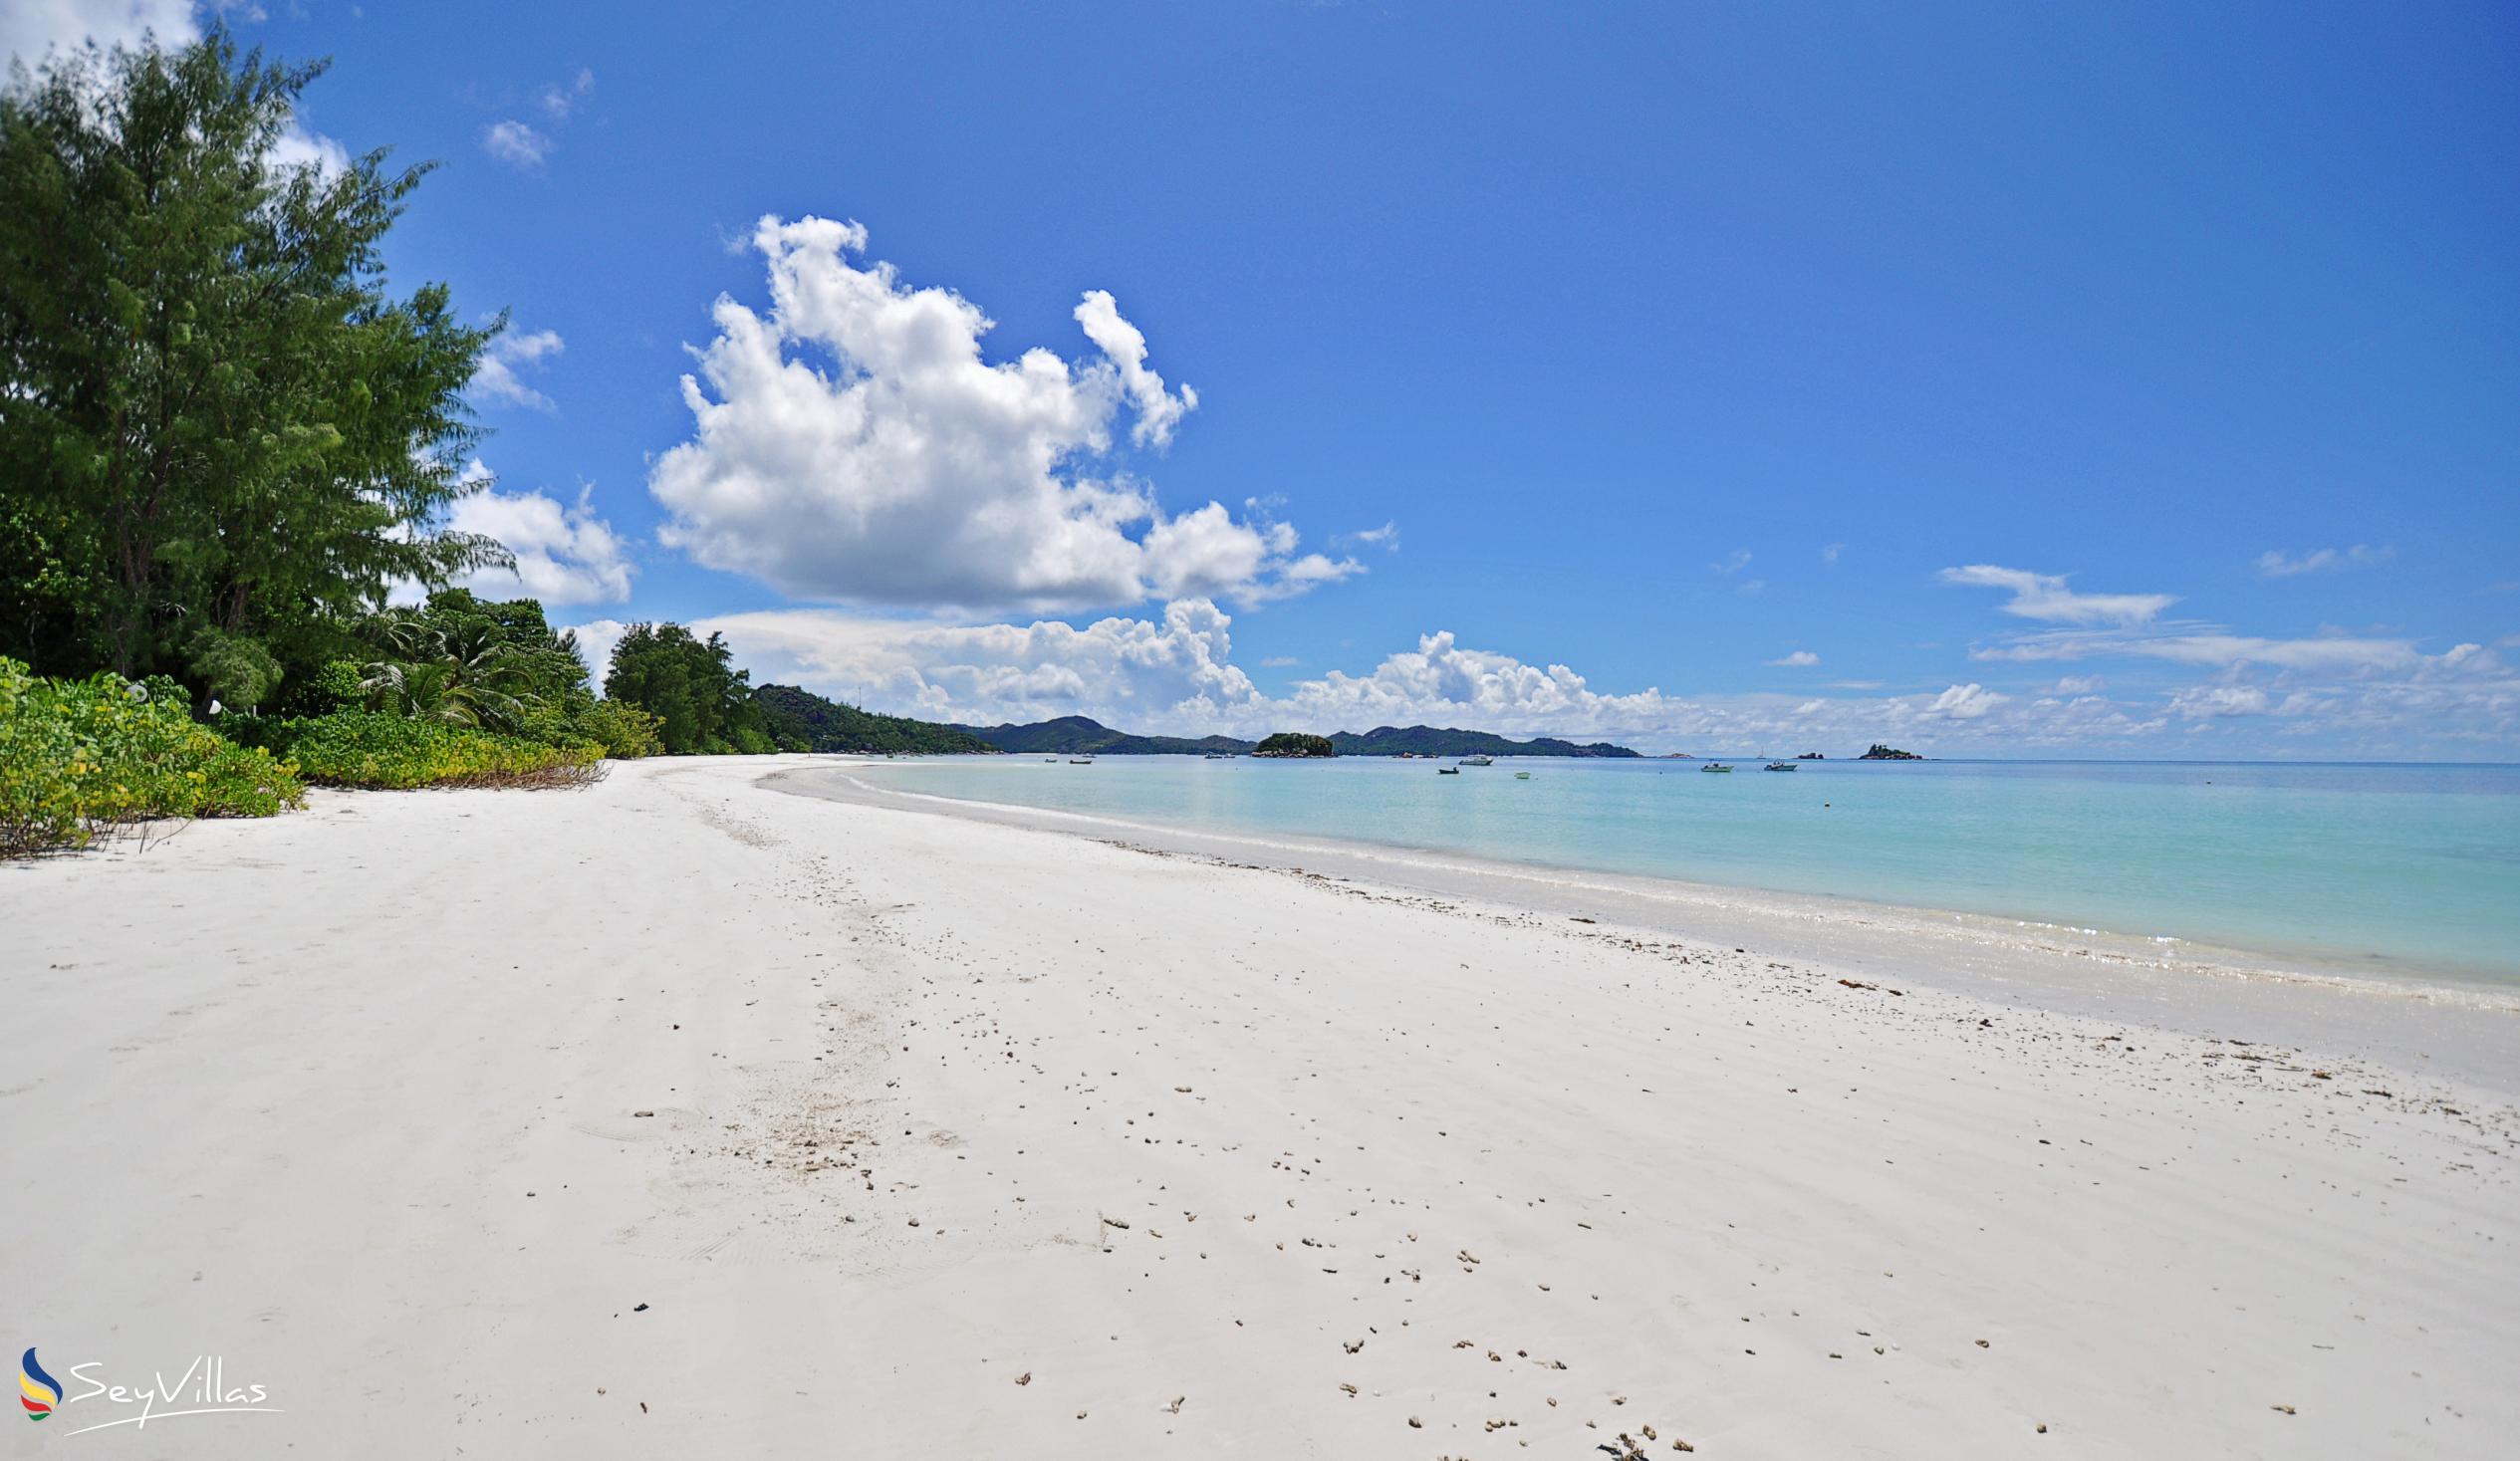 Photo 72: Cote d'Or Footprints - Beaches - Praslin (Seychelles)